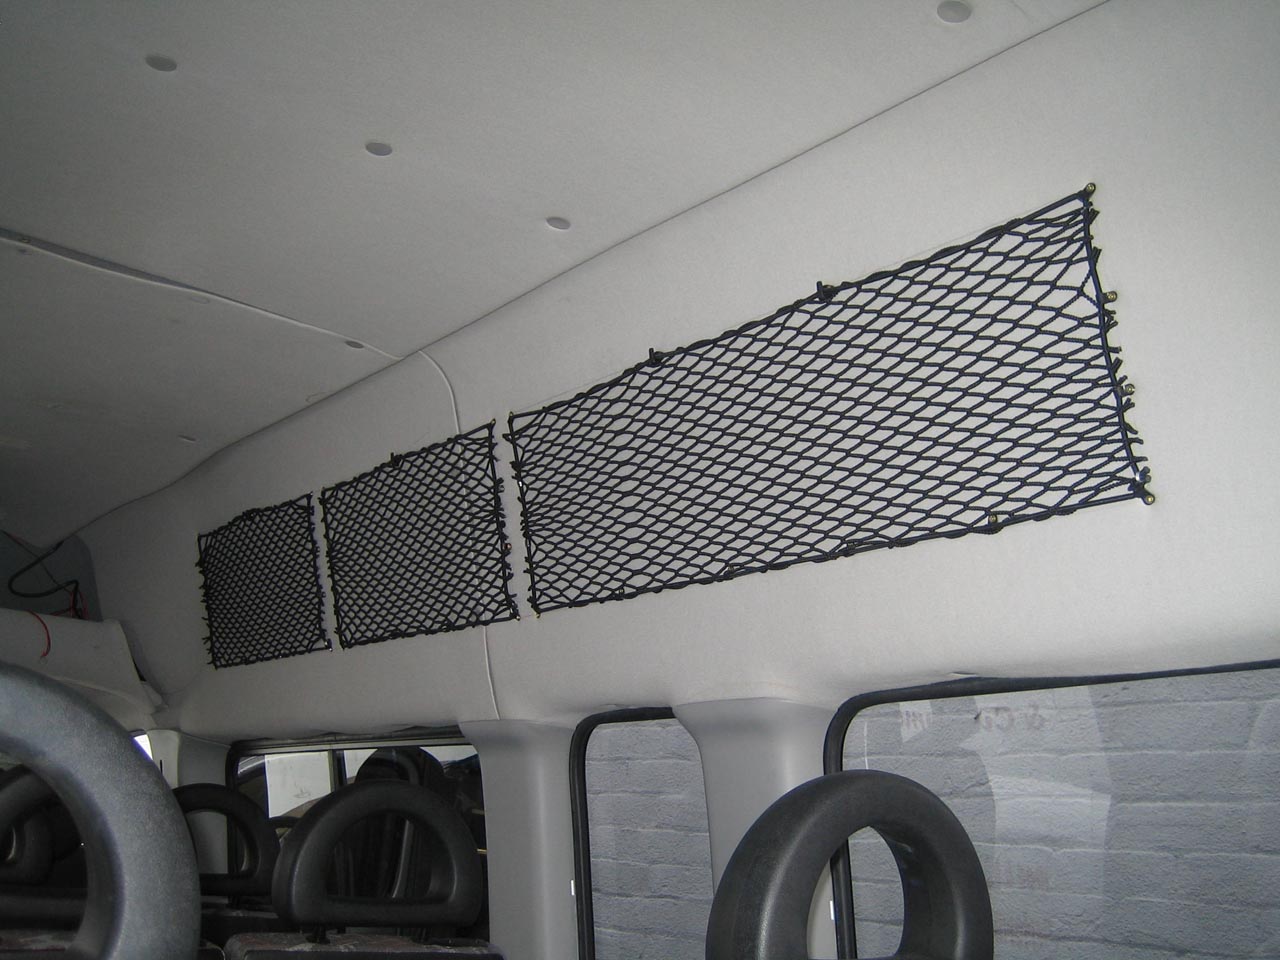 Bespoke elastic nets to create storage space on the inside of a van